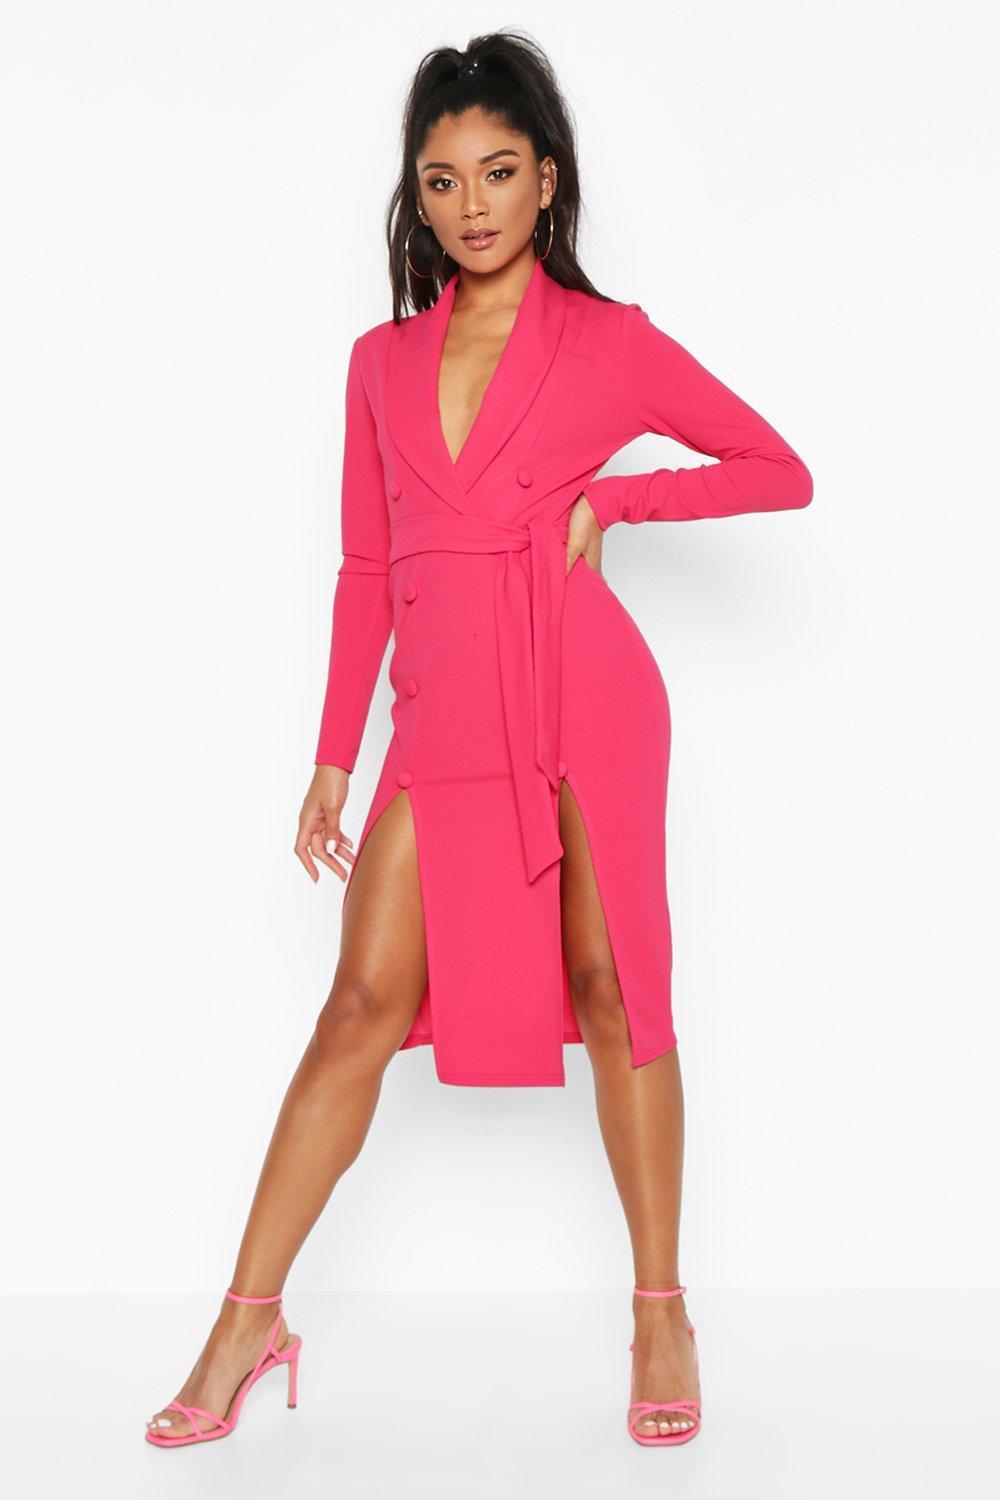 boohoo pink blazer dress